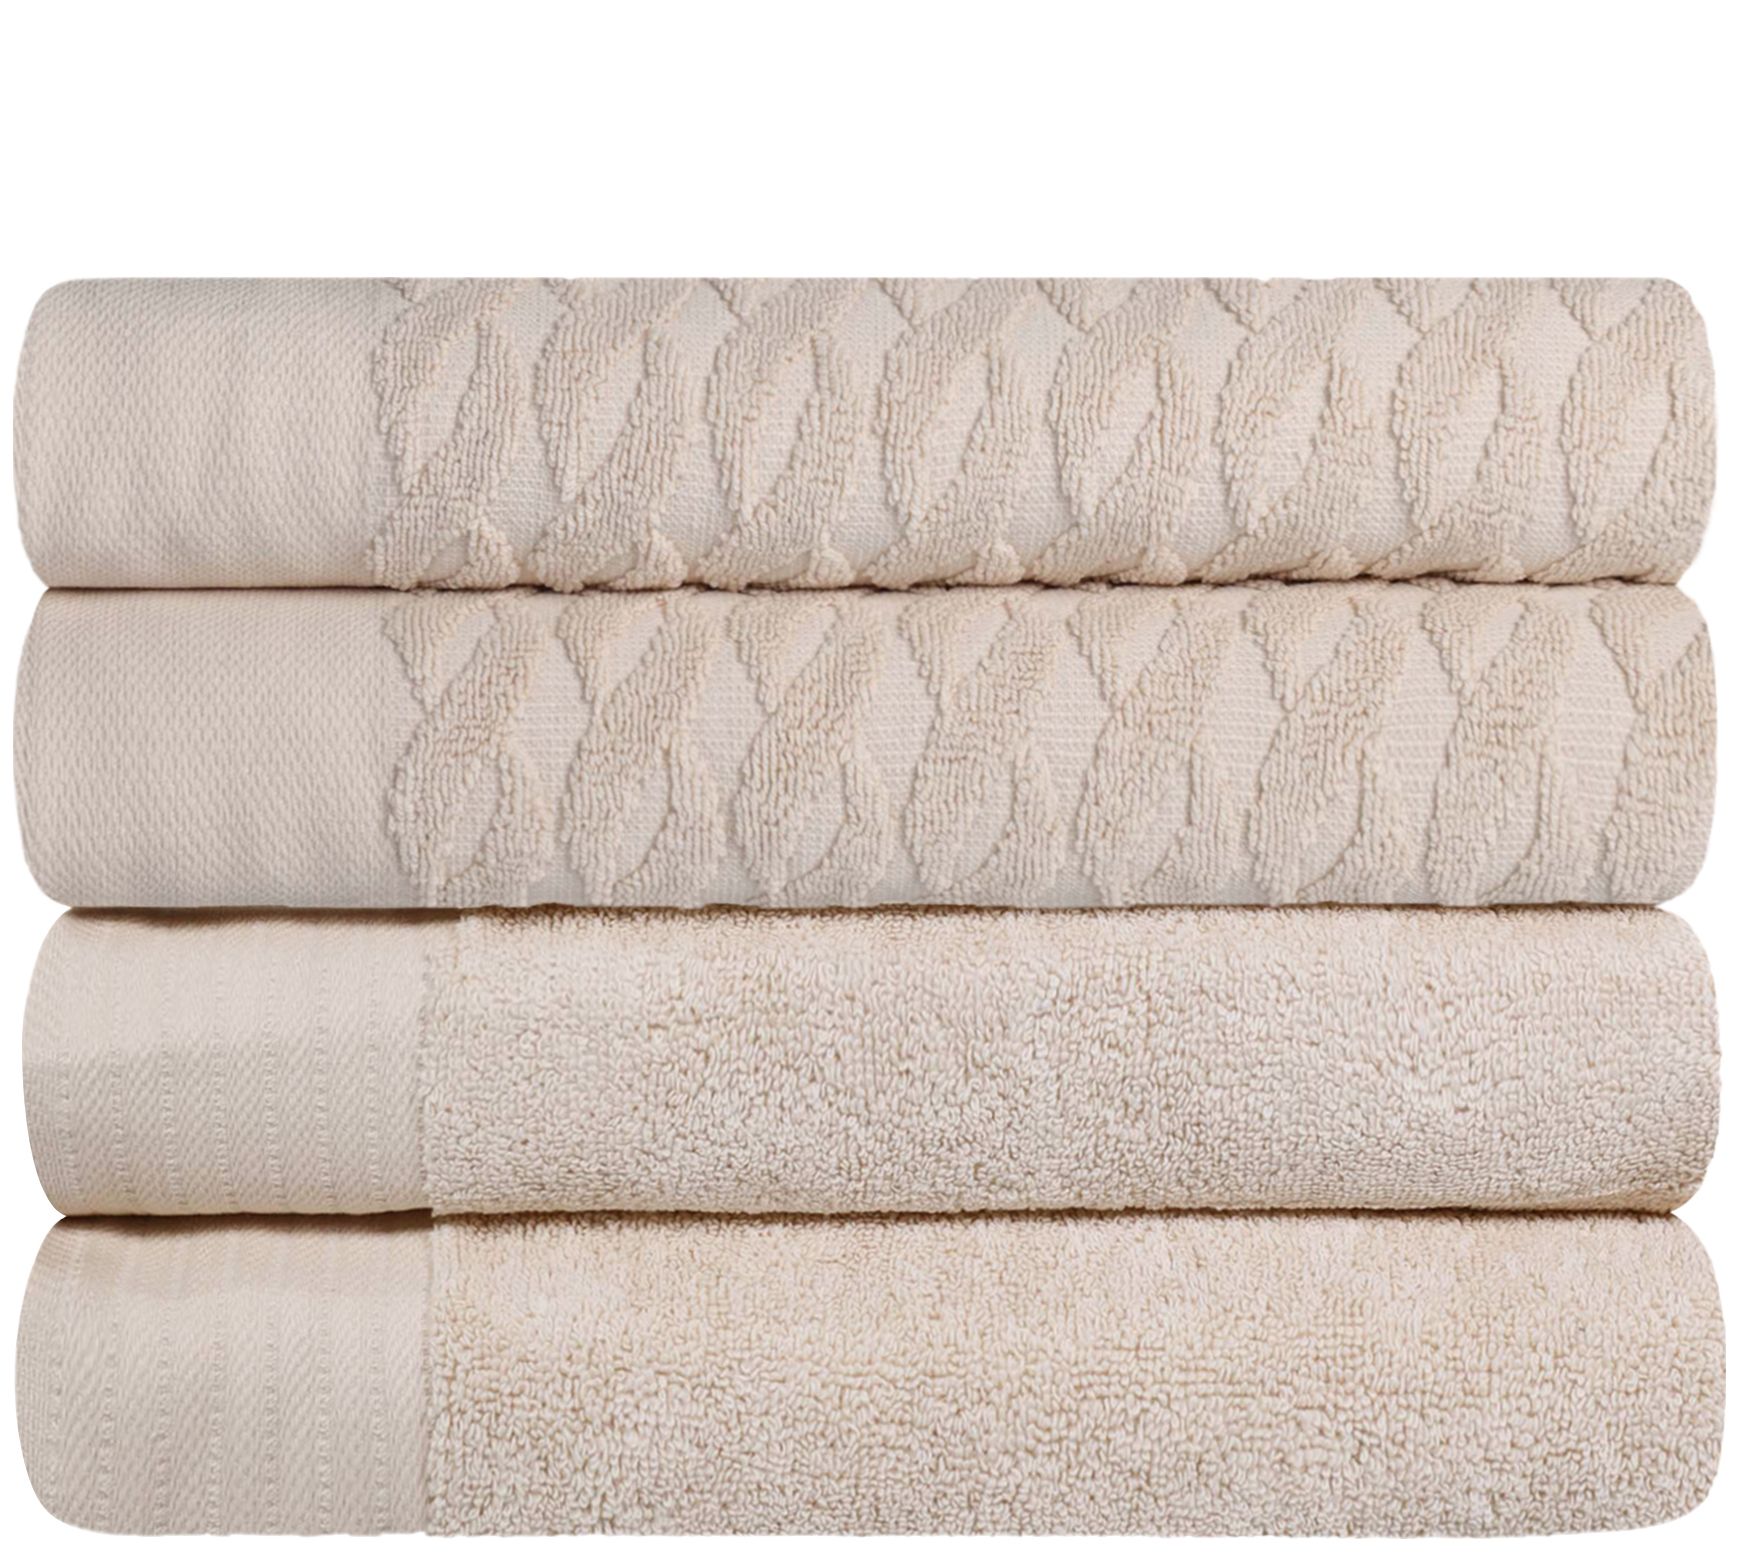 Superior Turkish Cotton 4-Piece Jacquard and So lid Bath Towel - QVC.com